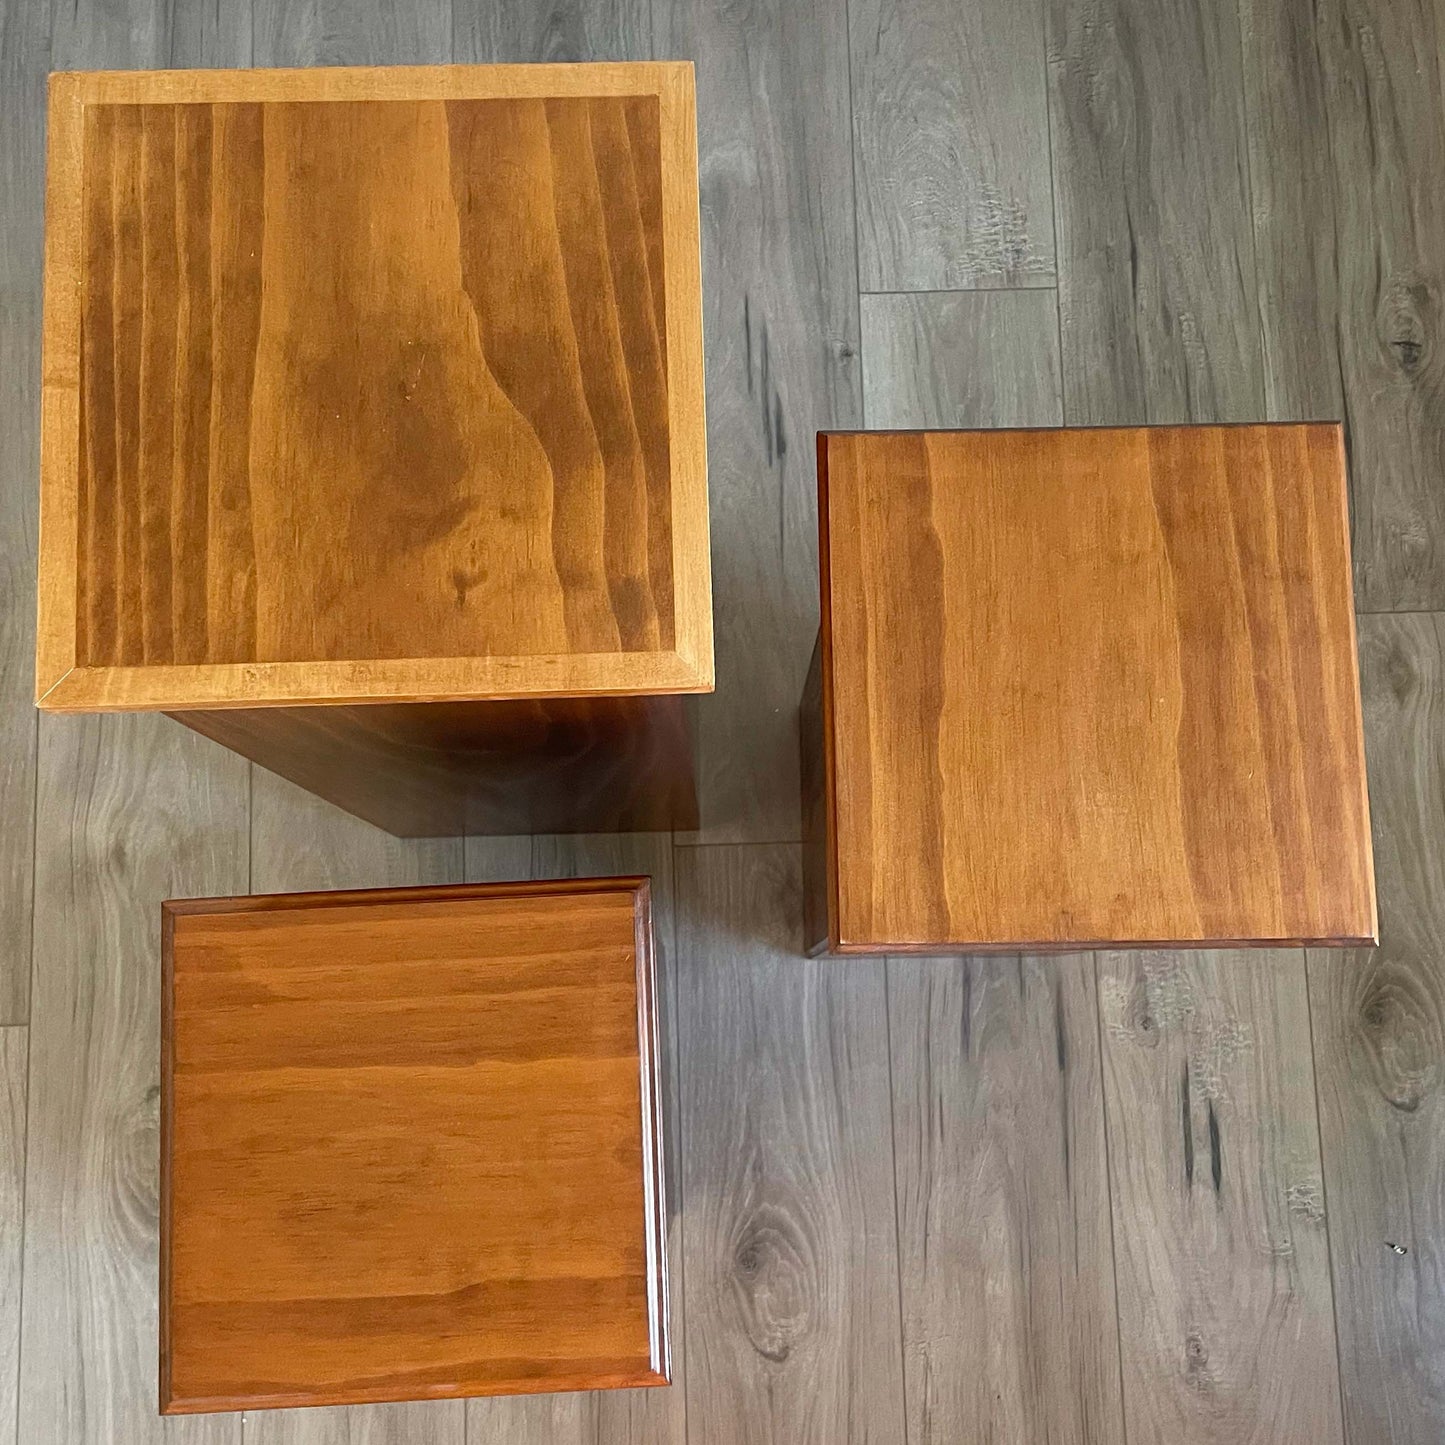 Set of 3 Wooden Pedestals